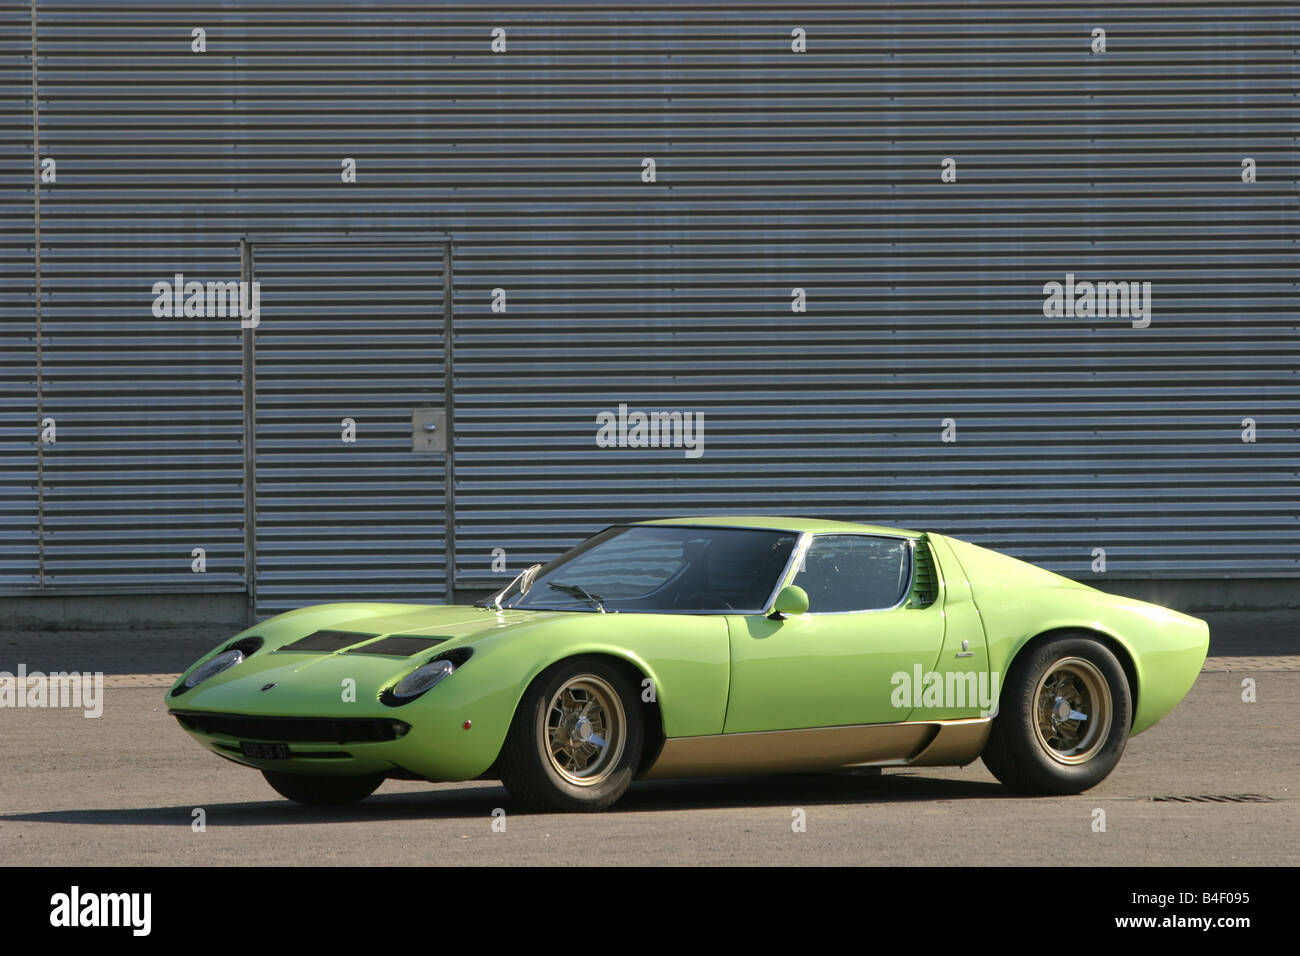 Lamborghini miura green hi-res stock photography and images - Alamy